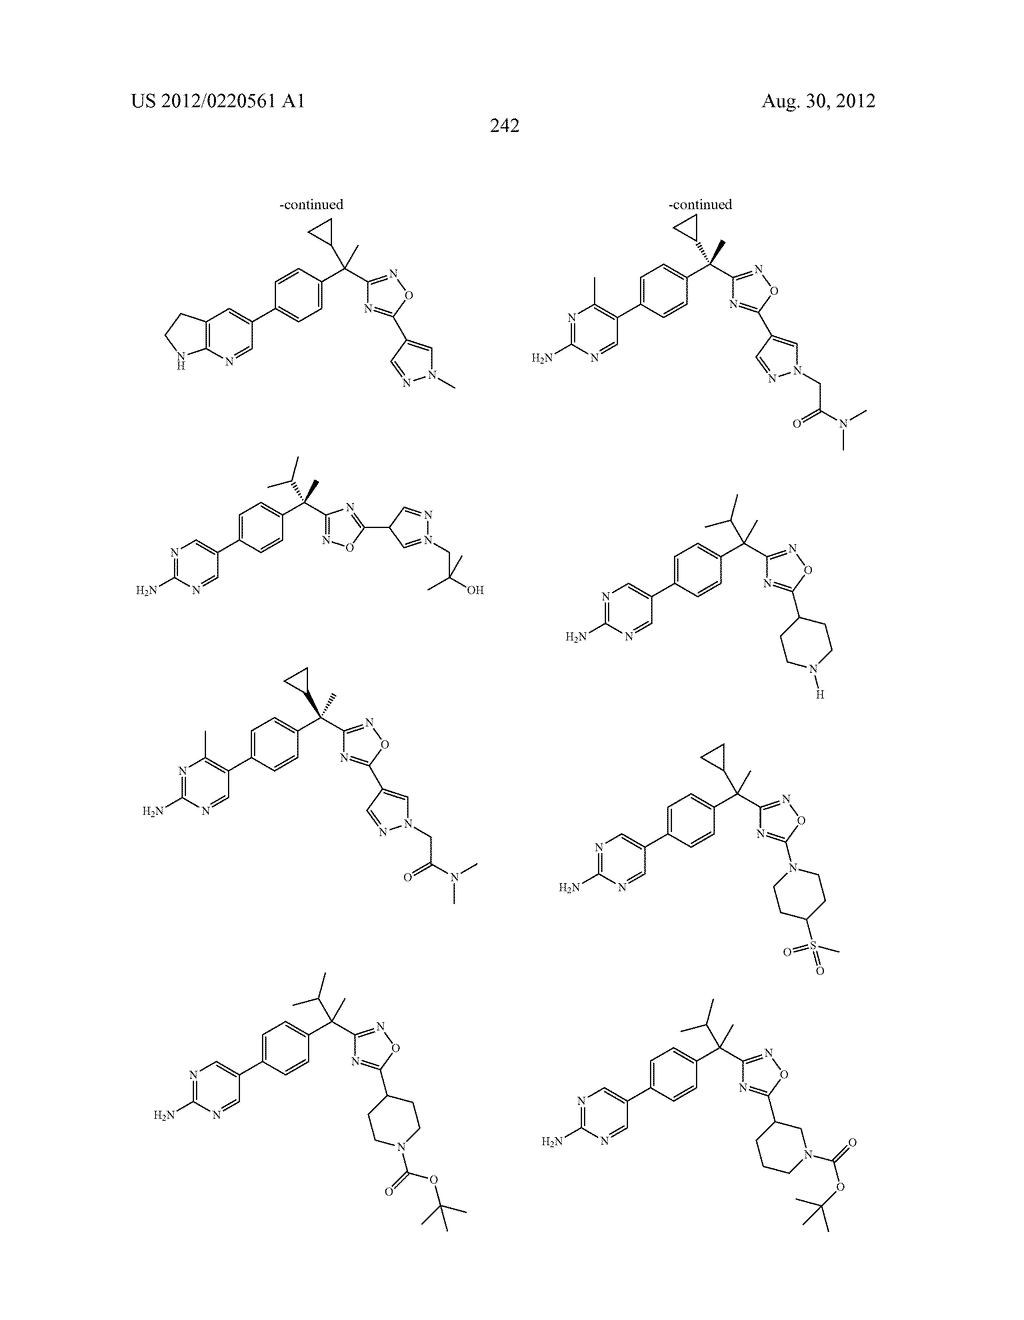 OXADIAZOLE INHIBITORS OF LEUKOTRIENE PRODUCTION - diagram, schematic, and image 243